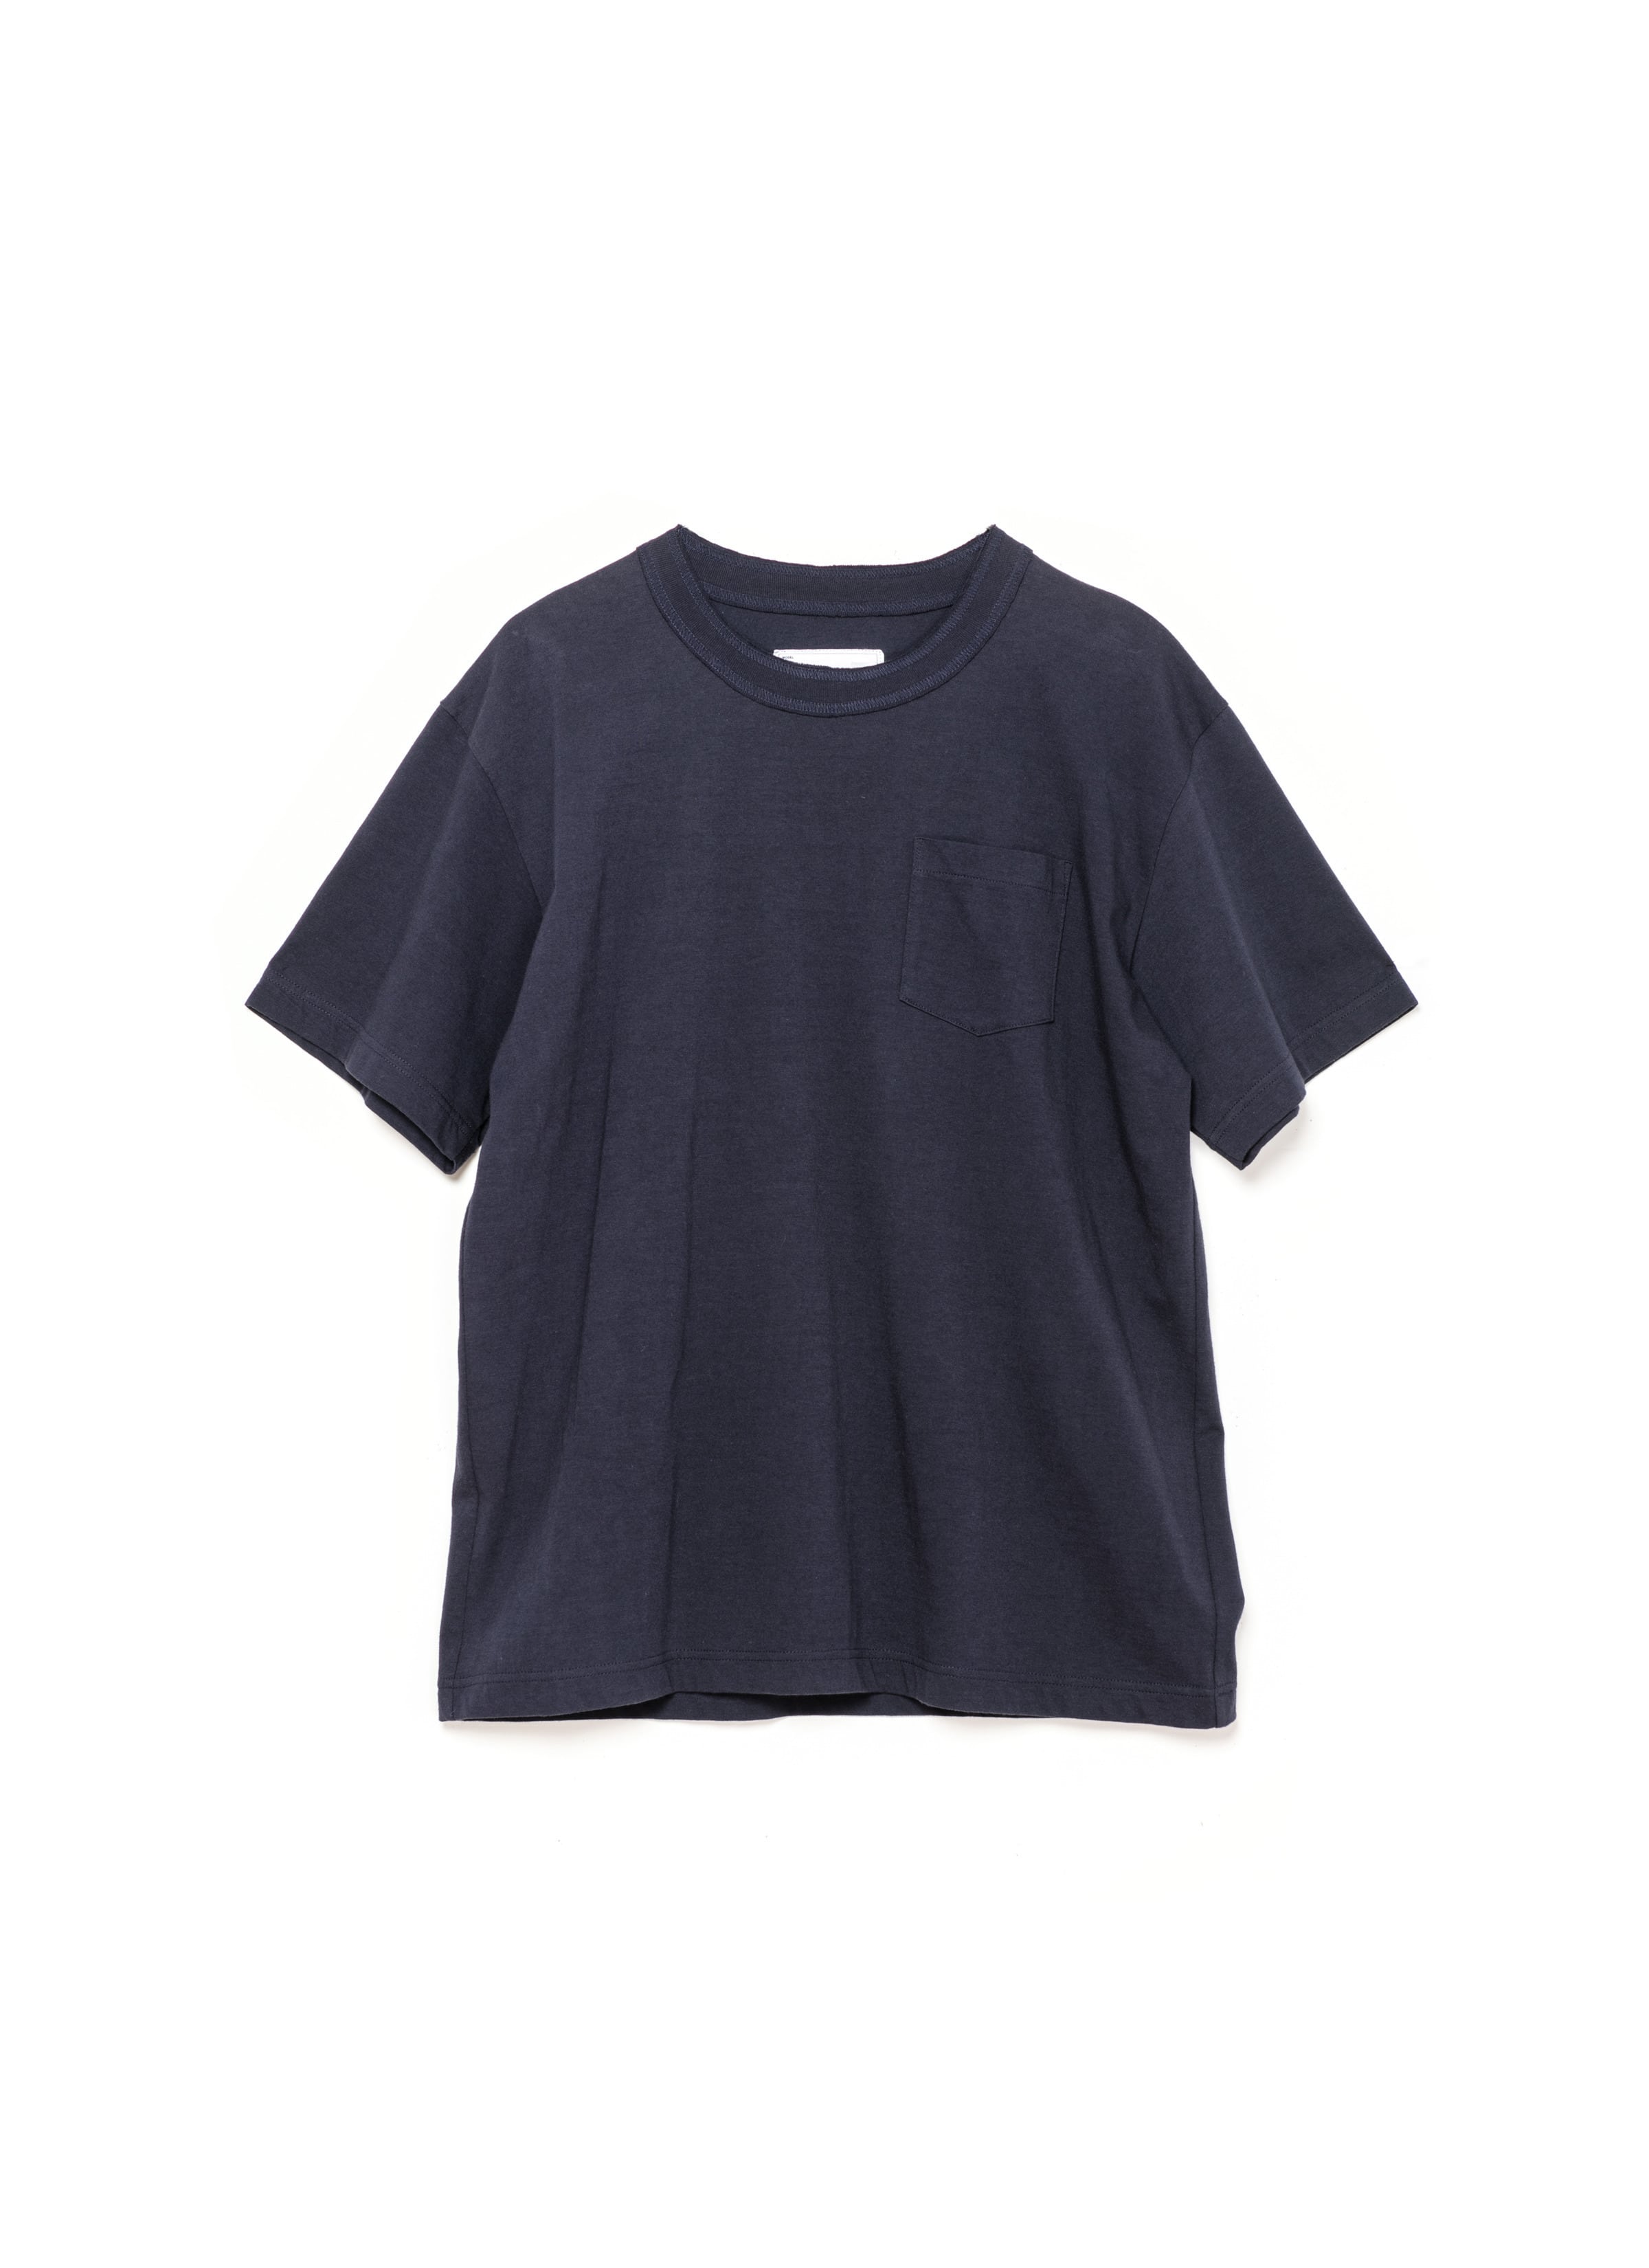 Cotton T-Shirt 詳細画像 NAVY 1